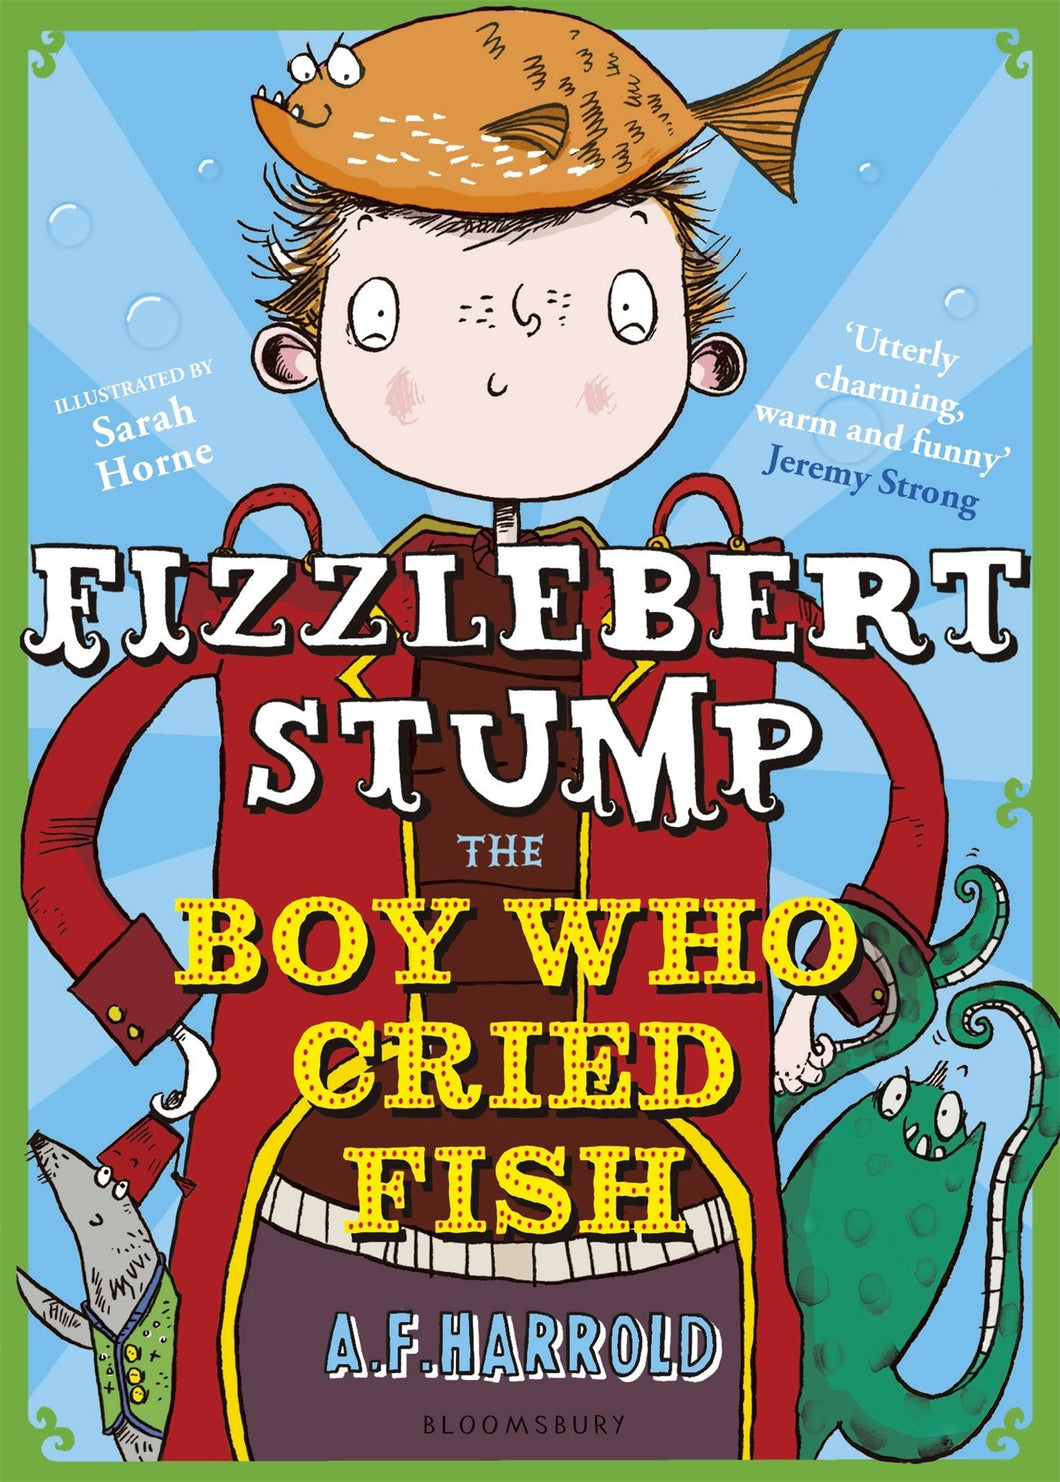 FIZZLEBERT STUMP:The Boy Who Cried Fish